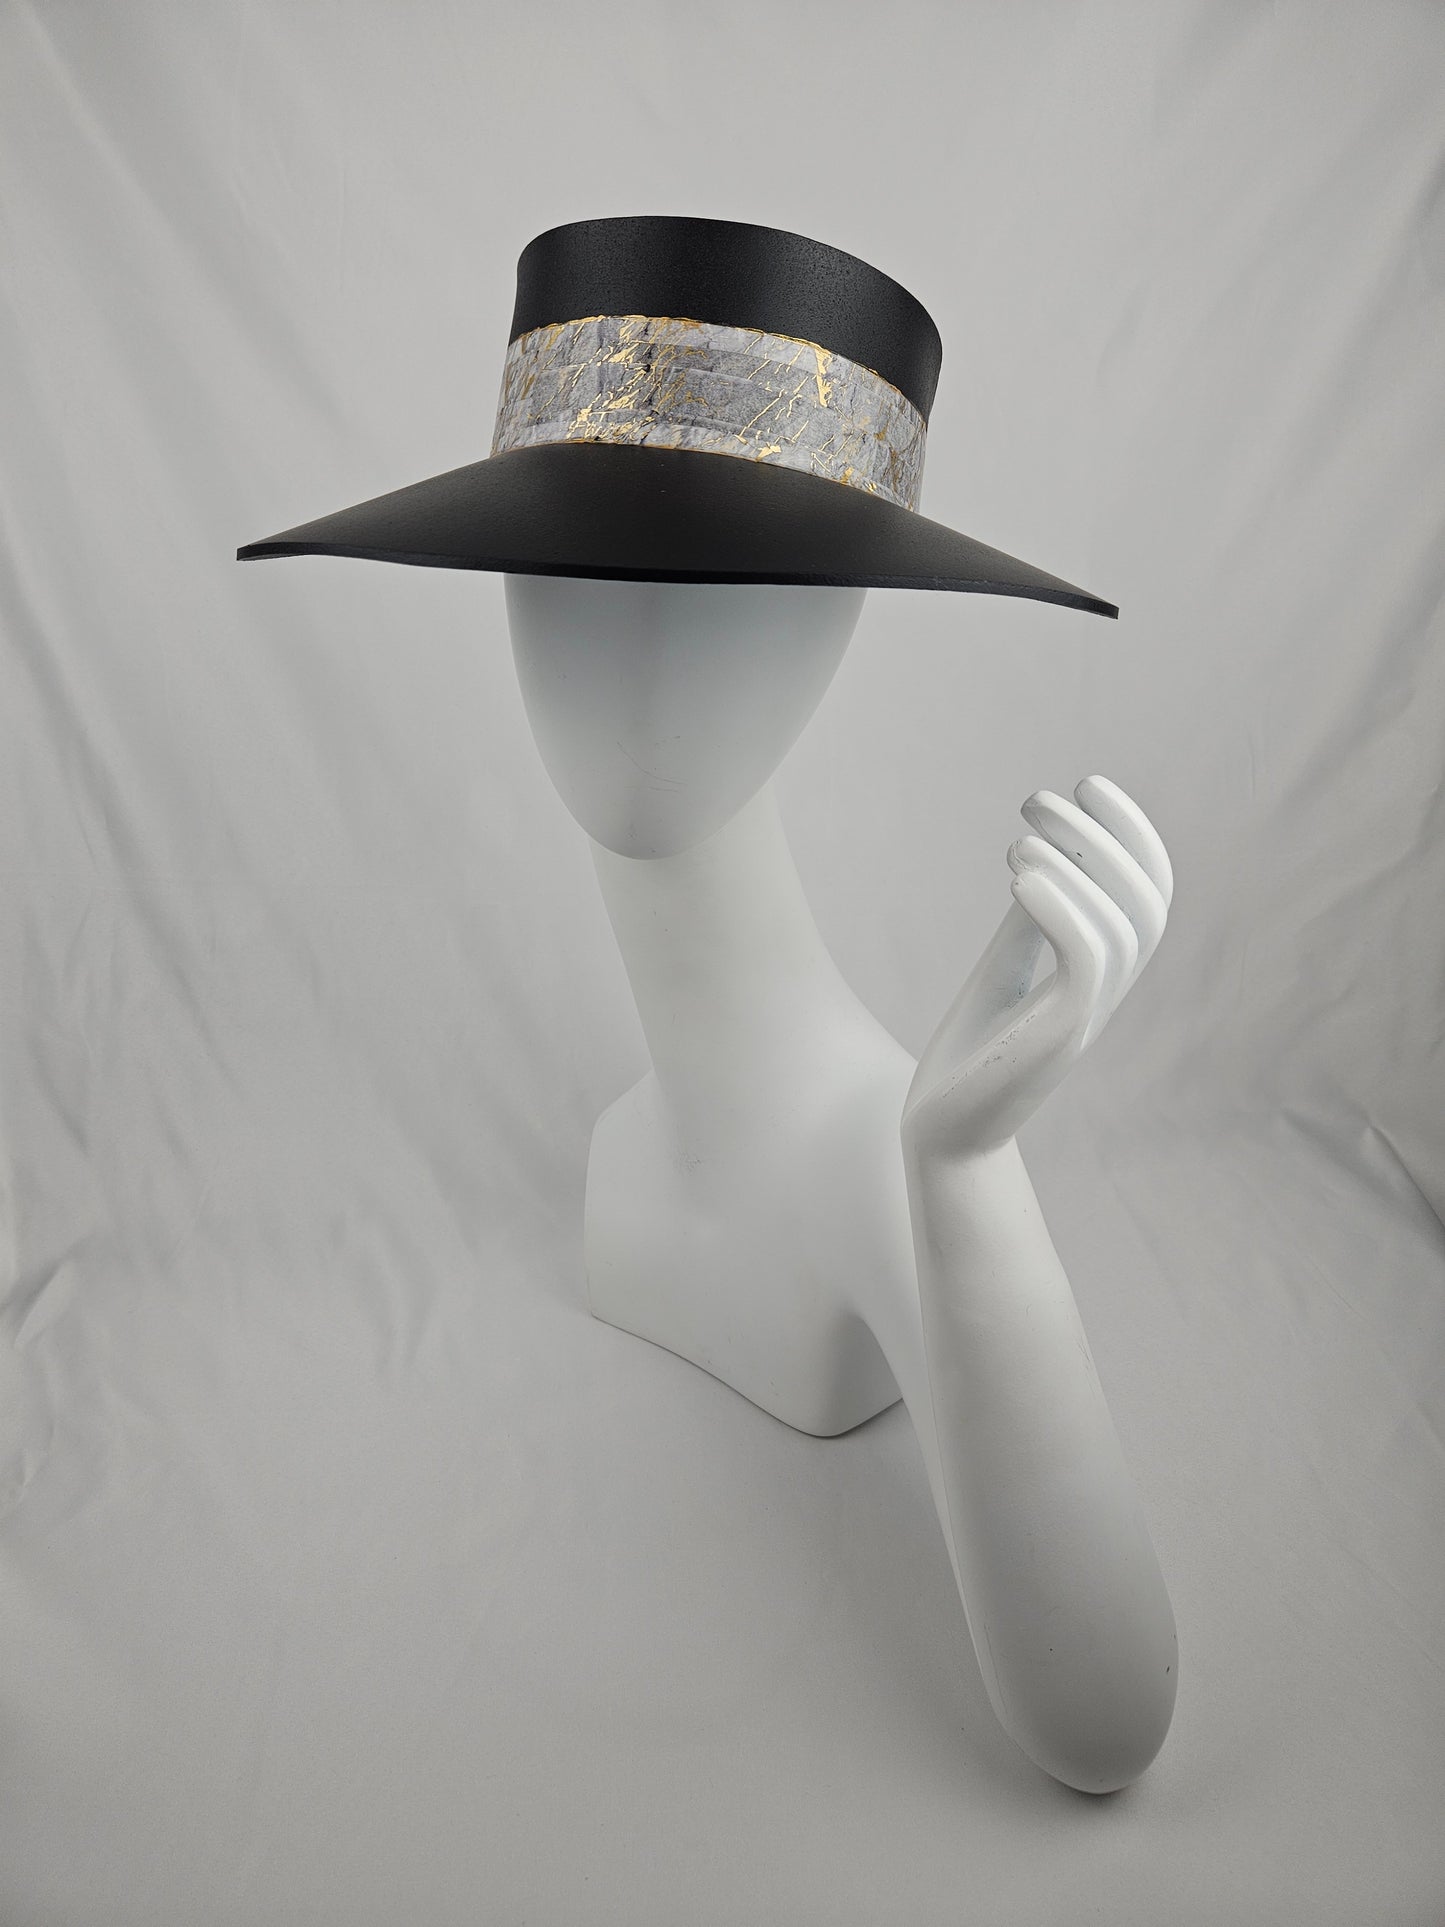 Tall Timeless Black Audrey Foam Sun Visor Hat with Elegant Golden Marbled Band: 1920s, Walks, Brunch, Tea, Golf, Wedding, Church, No Headache, Easter, Pool